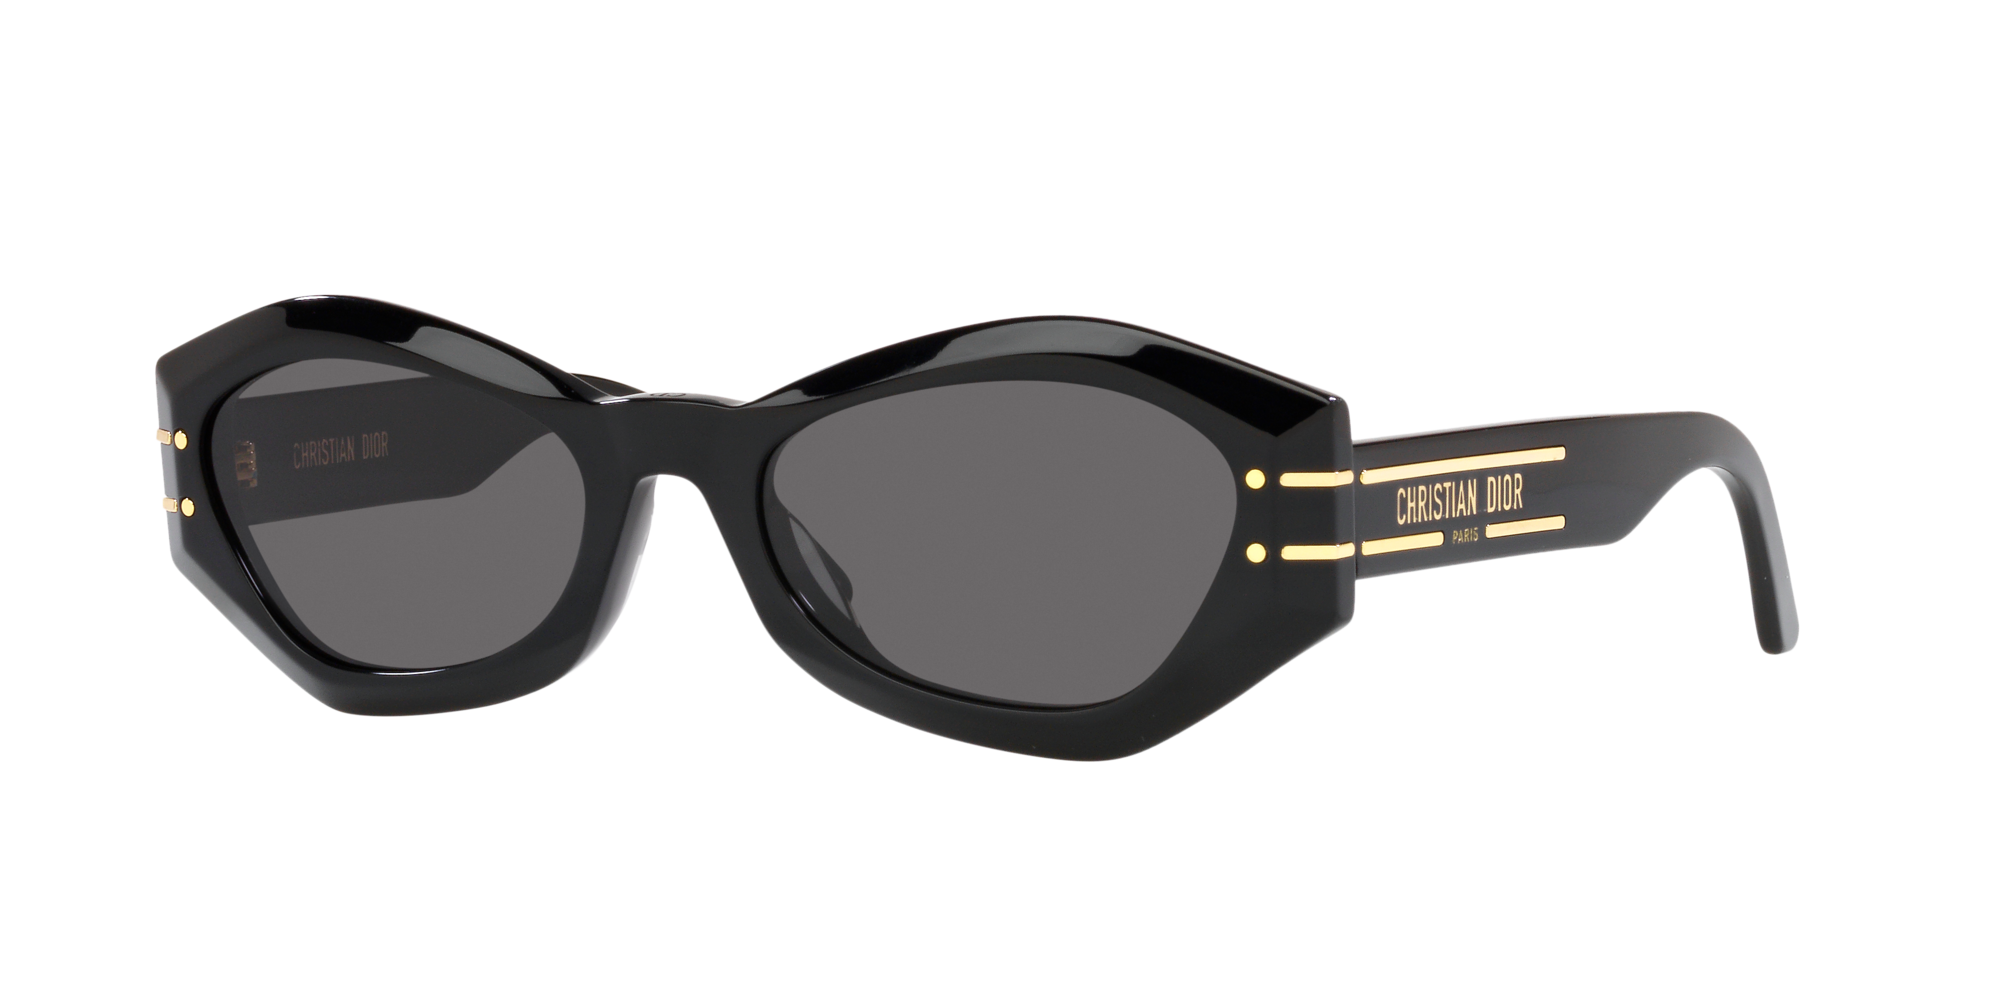 Dior Sunglasses Australia  1001 Optical